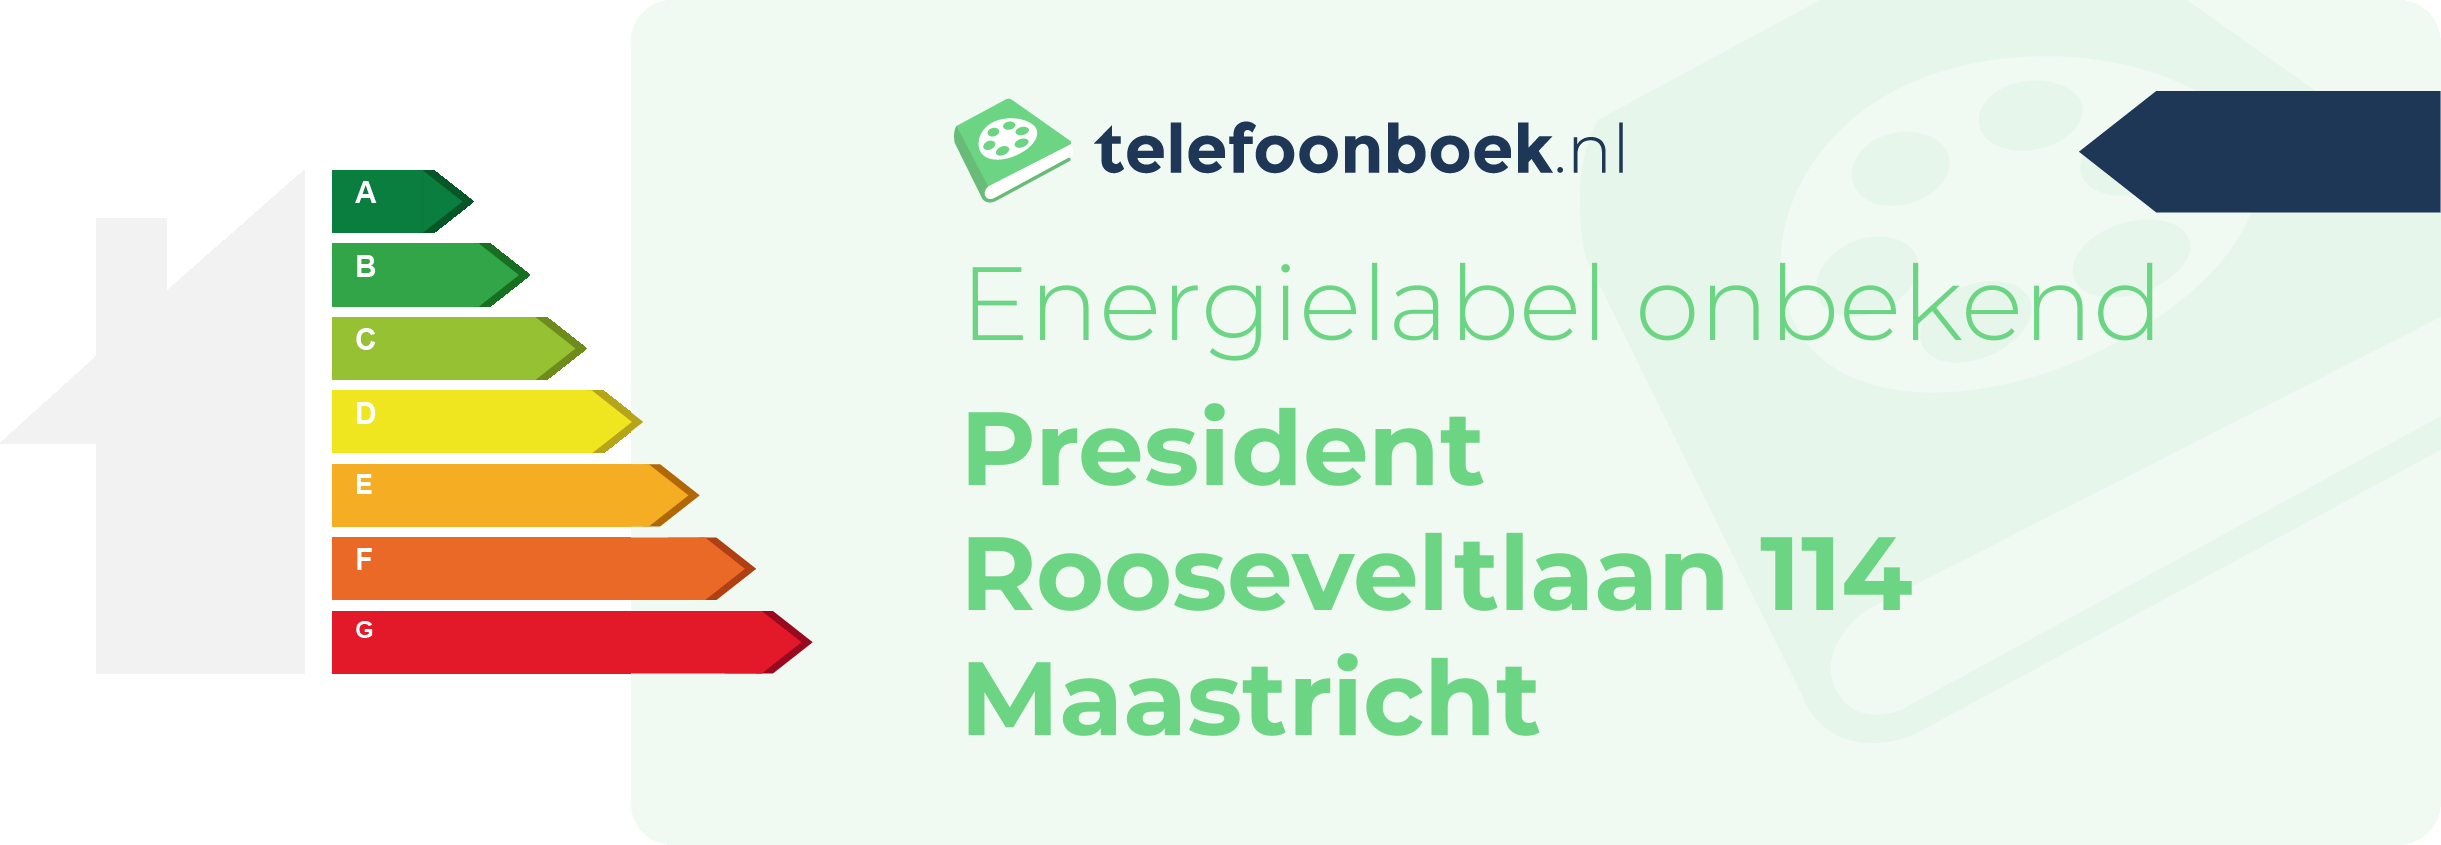 Energielabel President Rooseveltlaan 114 Maastricht